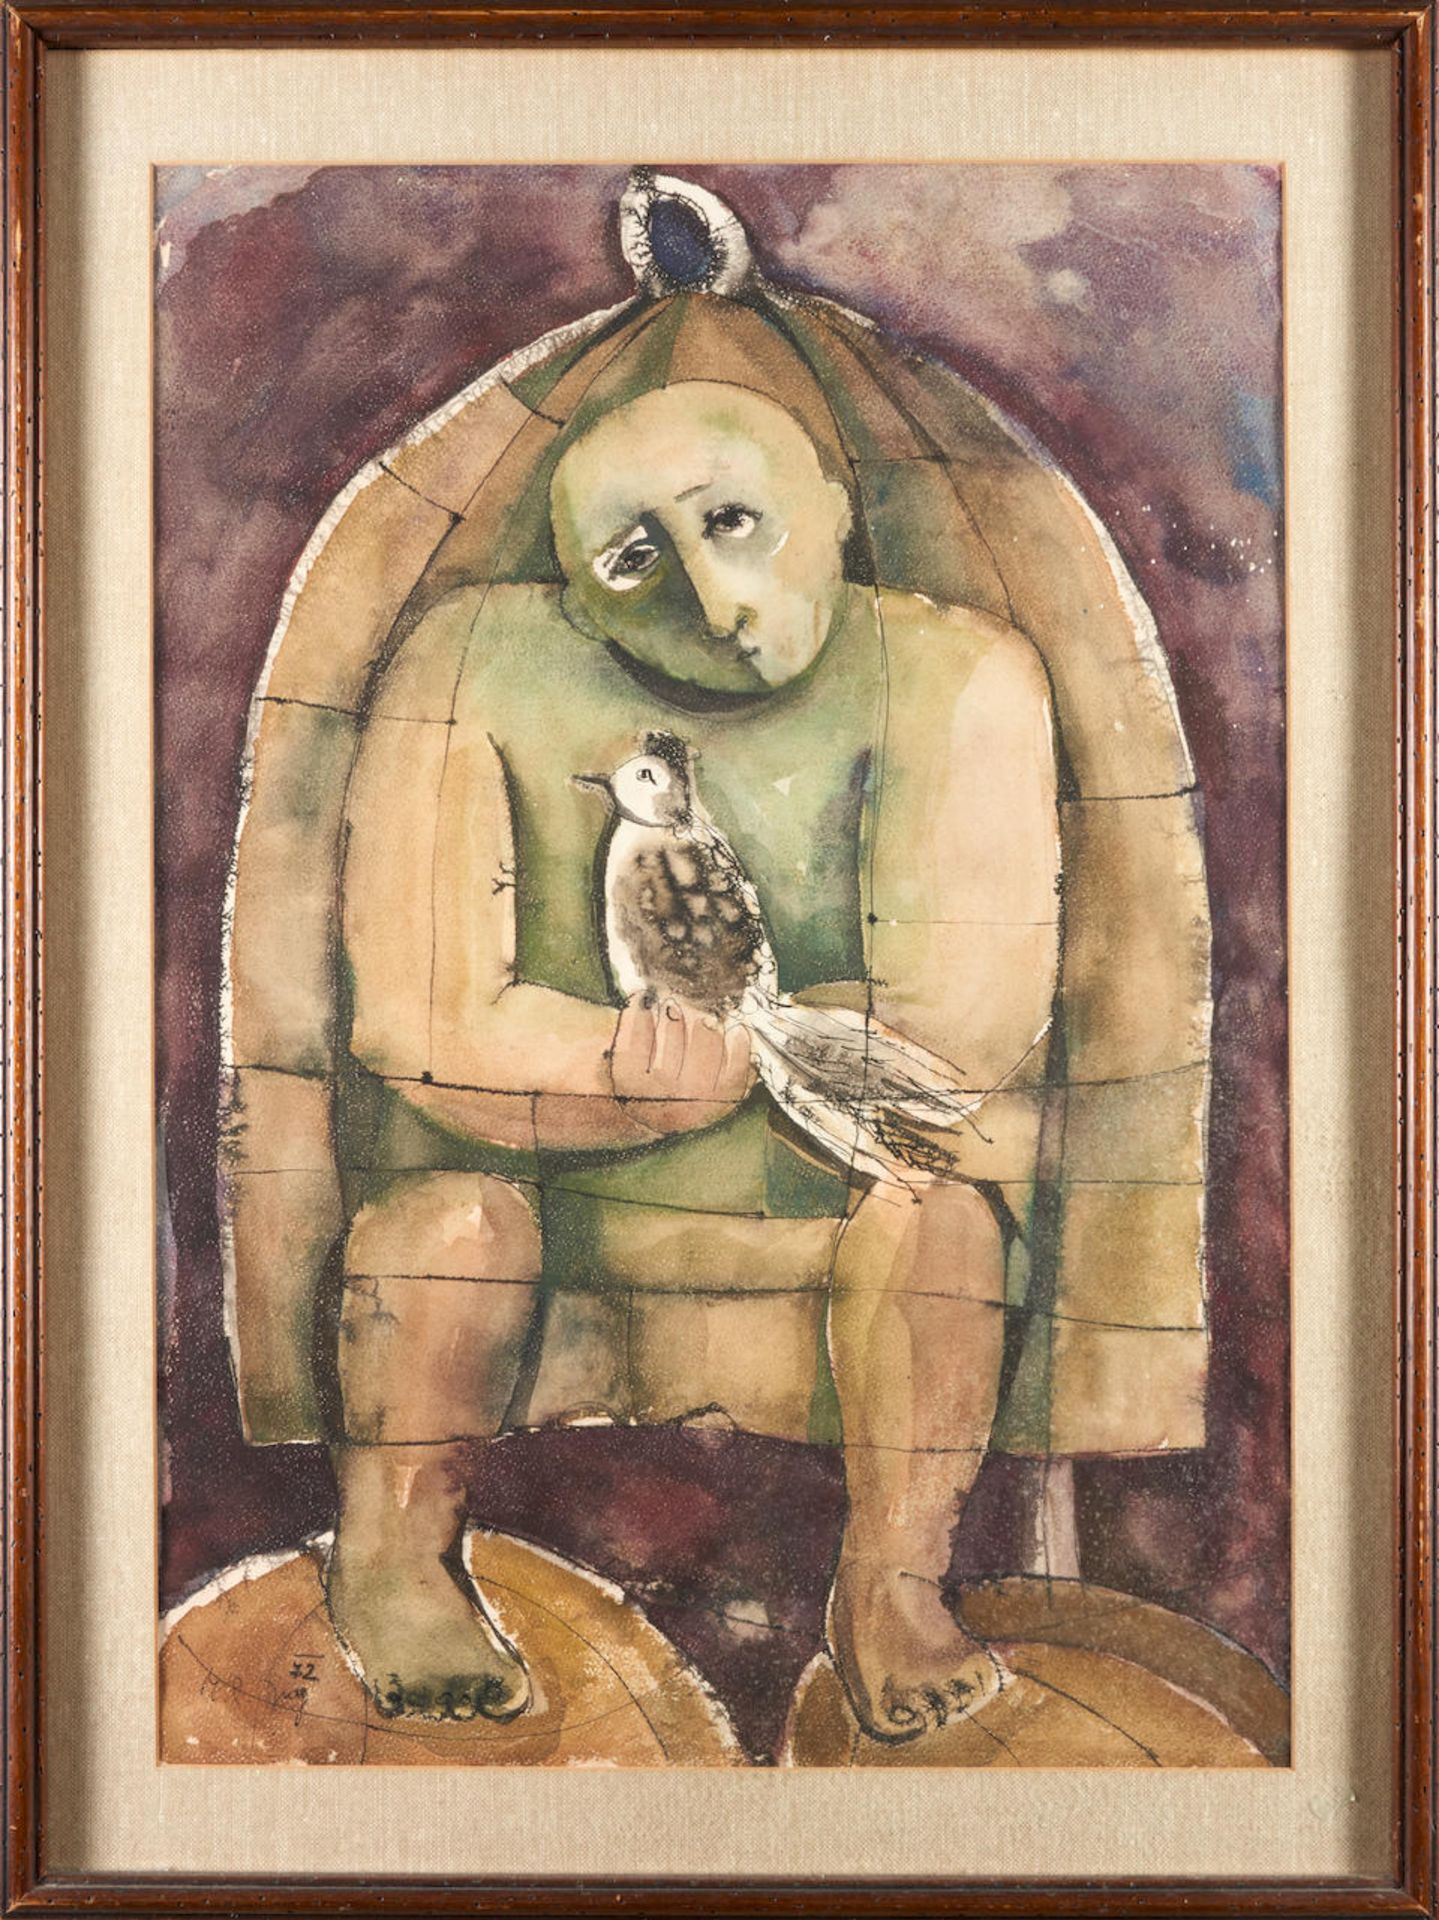 MARIJA PECARIC JUG (CROATIAN, BORN 1937) MAN IN A BIRDCAGE, 1972